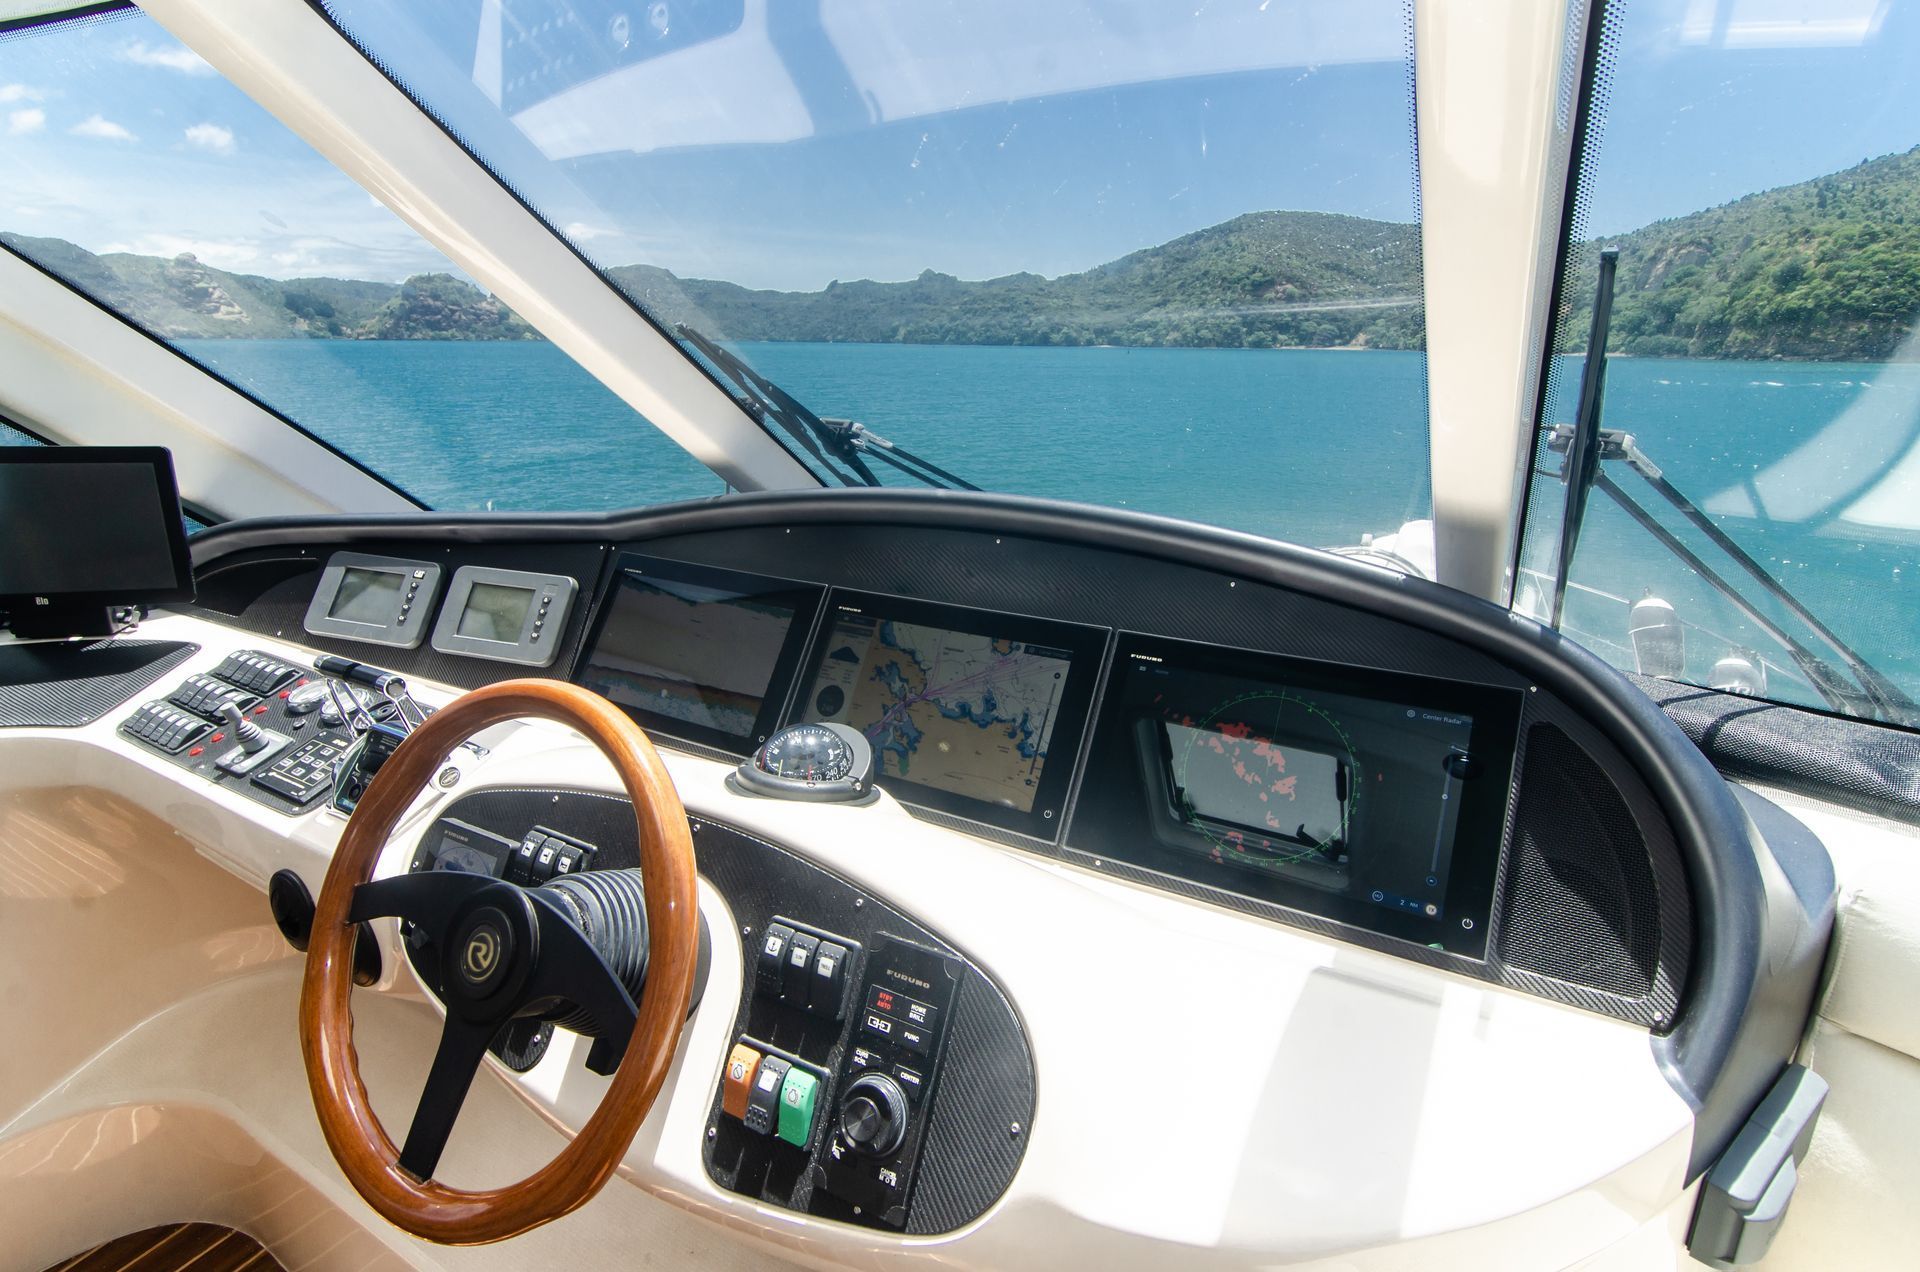 cockpit of a yacht